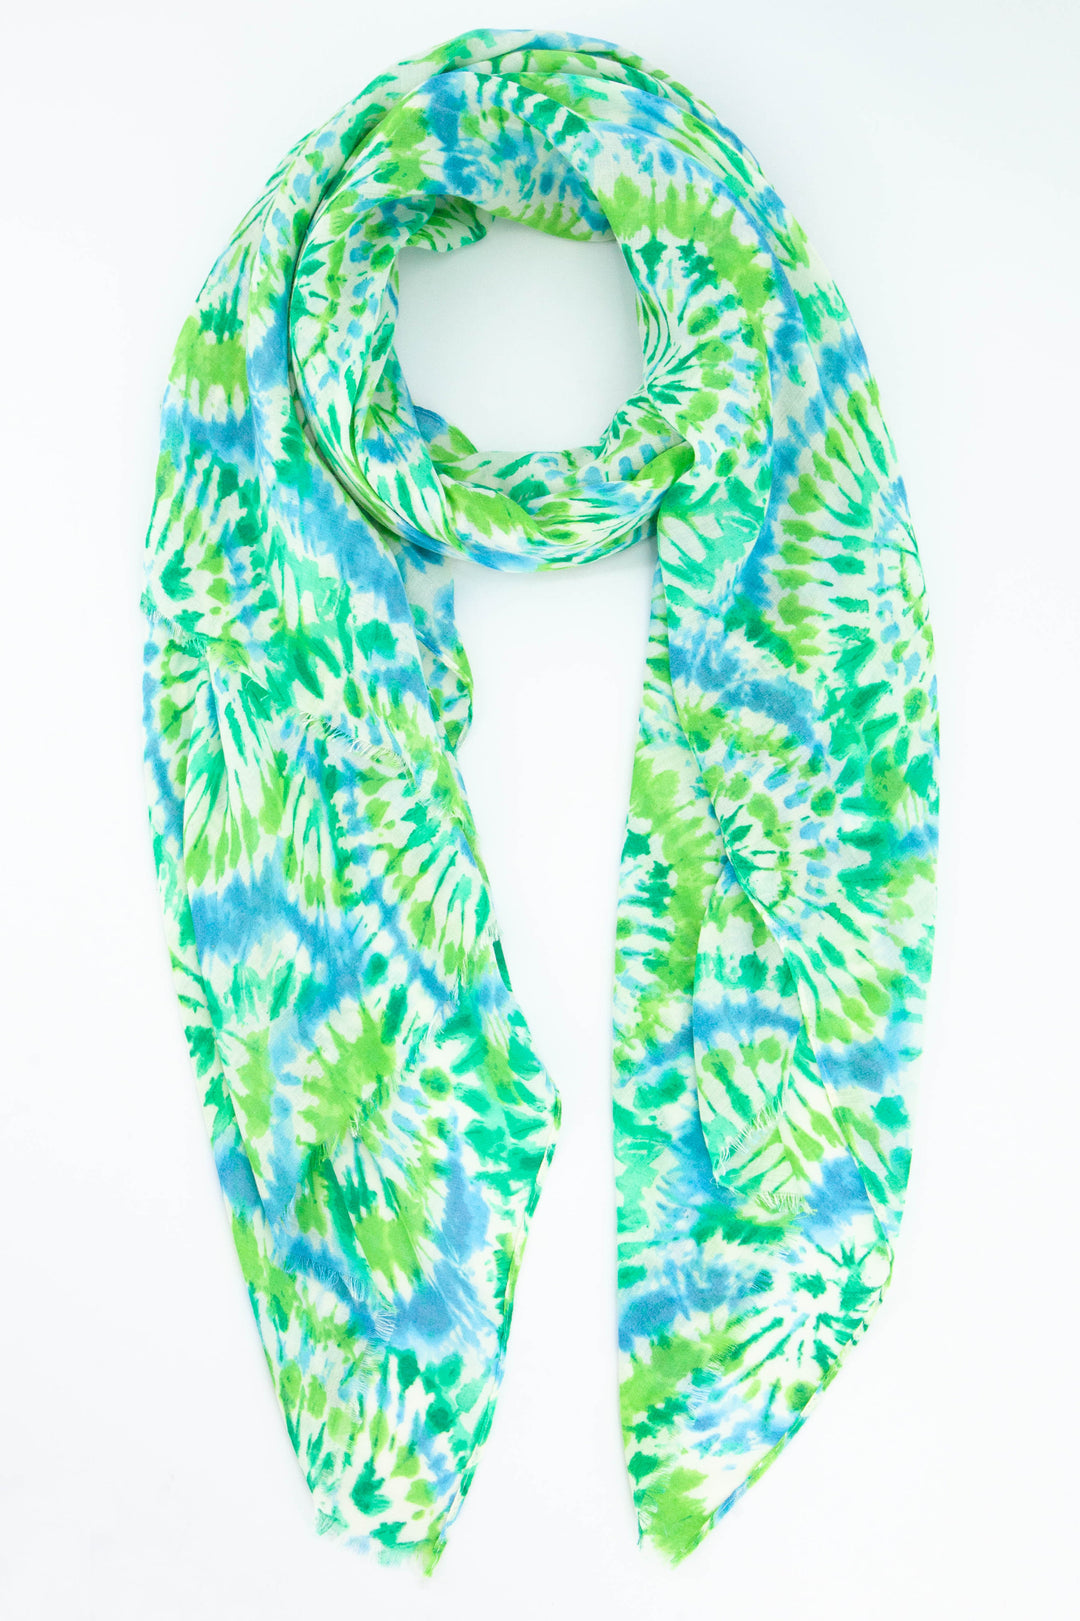 green and blue circular tie dye pattern scarf